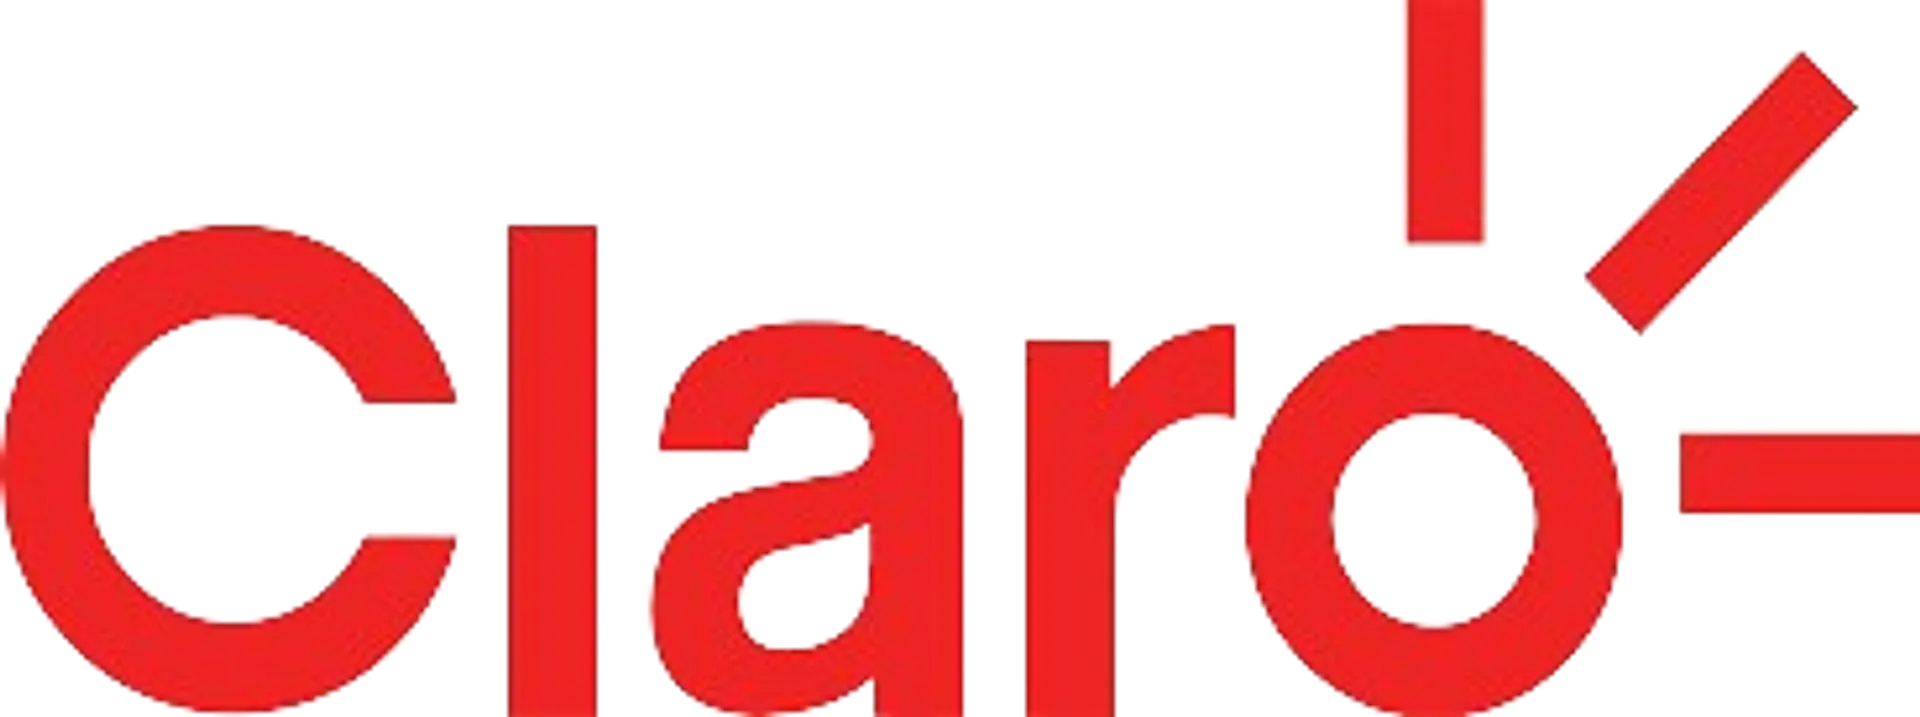 CLARO logo